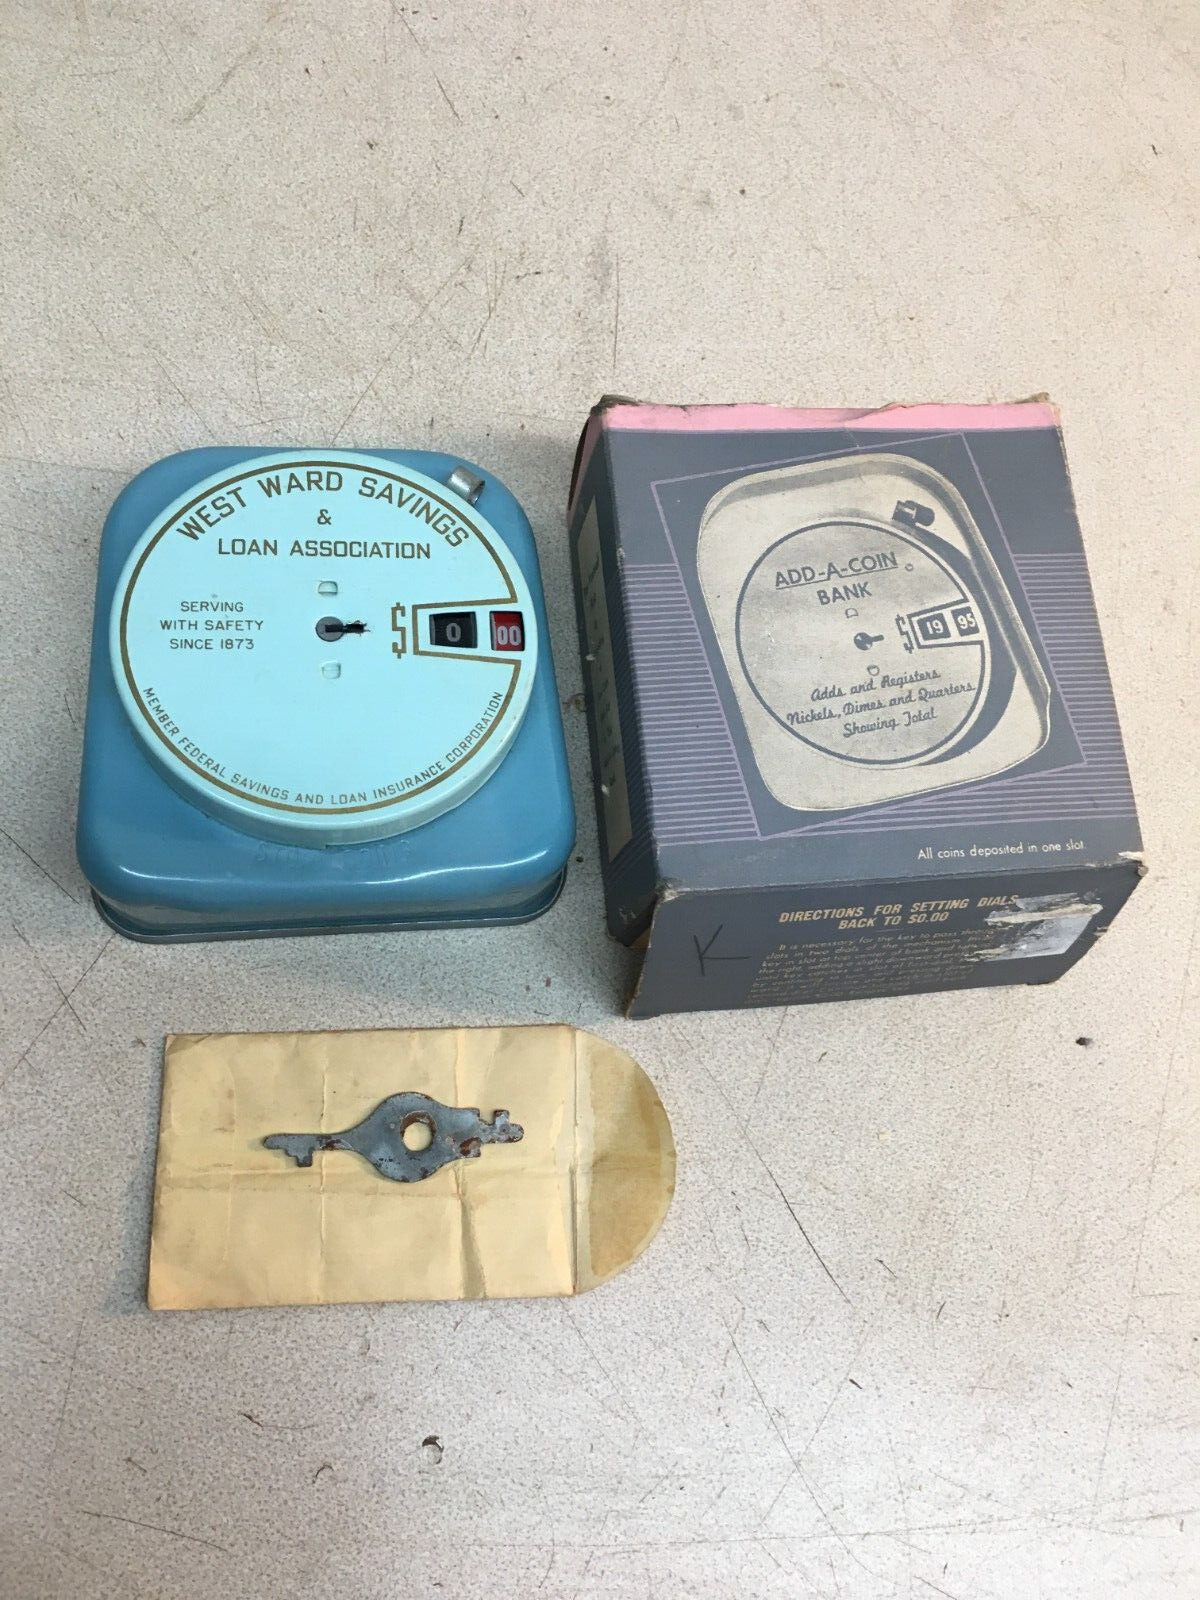 Vintage Add A Coin Piggy Bank West WARD SAVINGS  Tin Bank Original box and Key